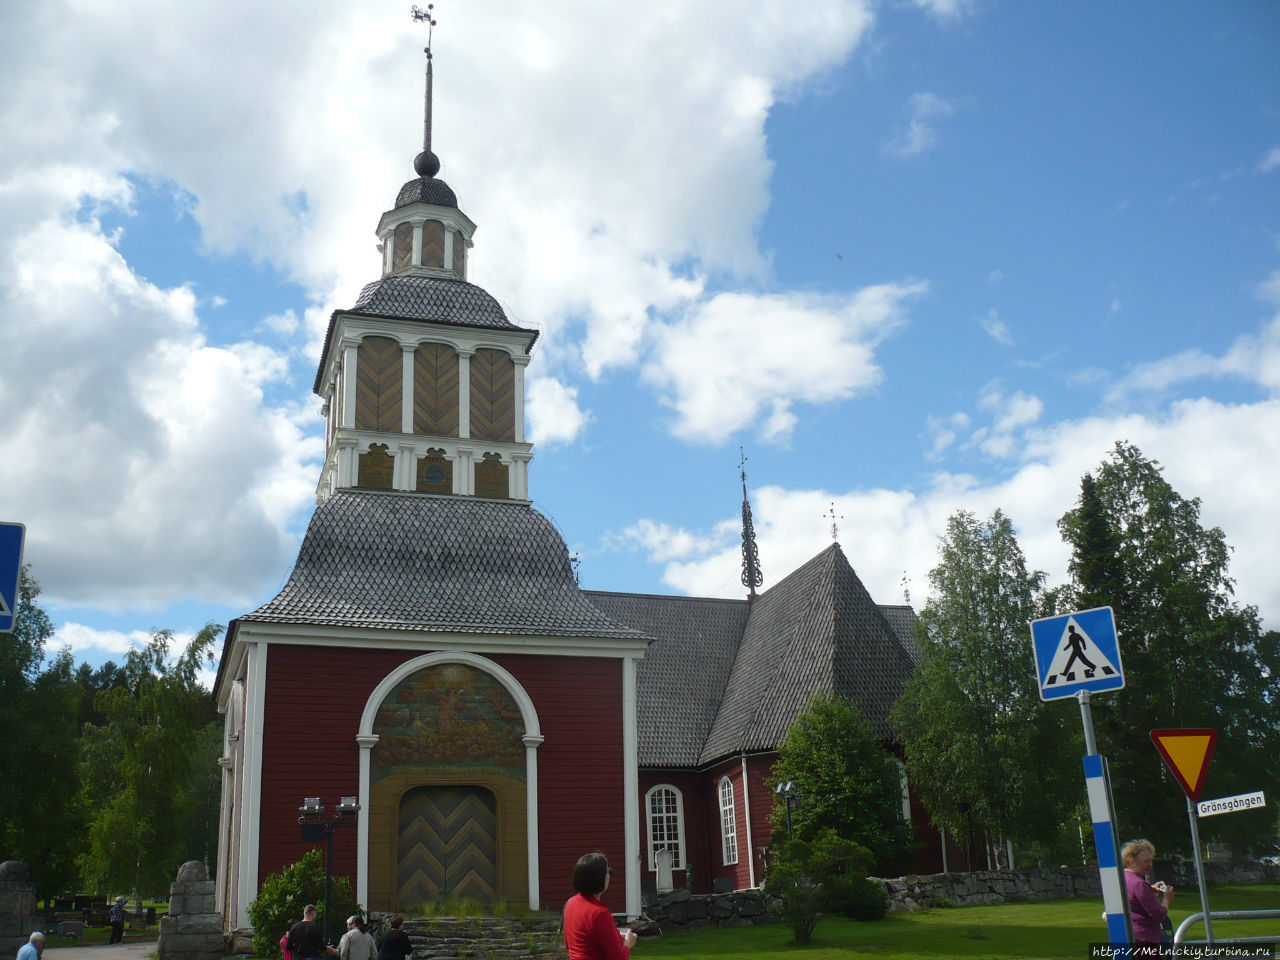 Церковь в Оверторнеа Эверторнеа, Швеция